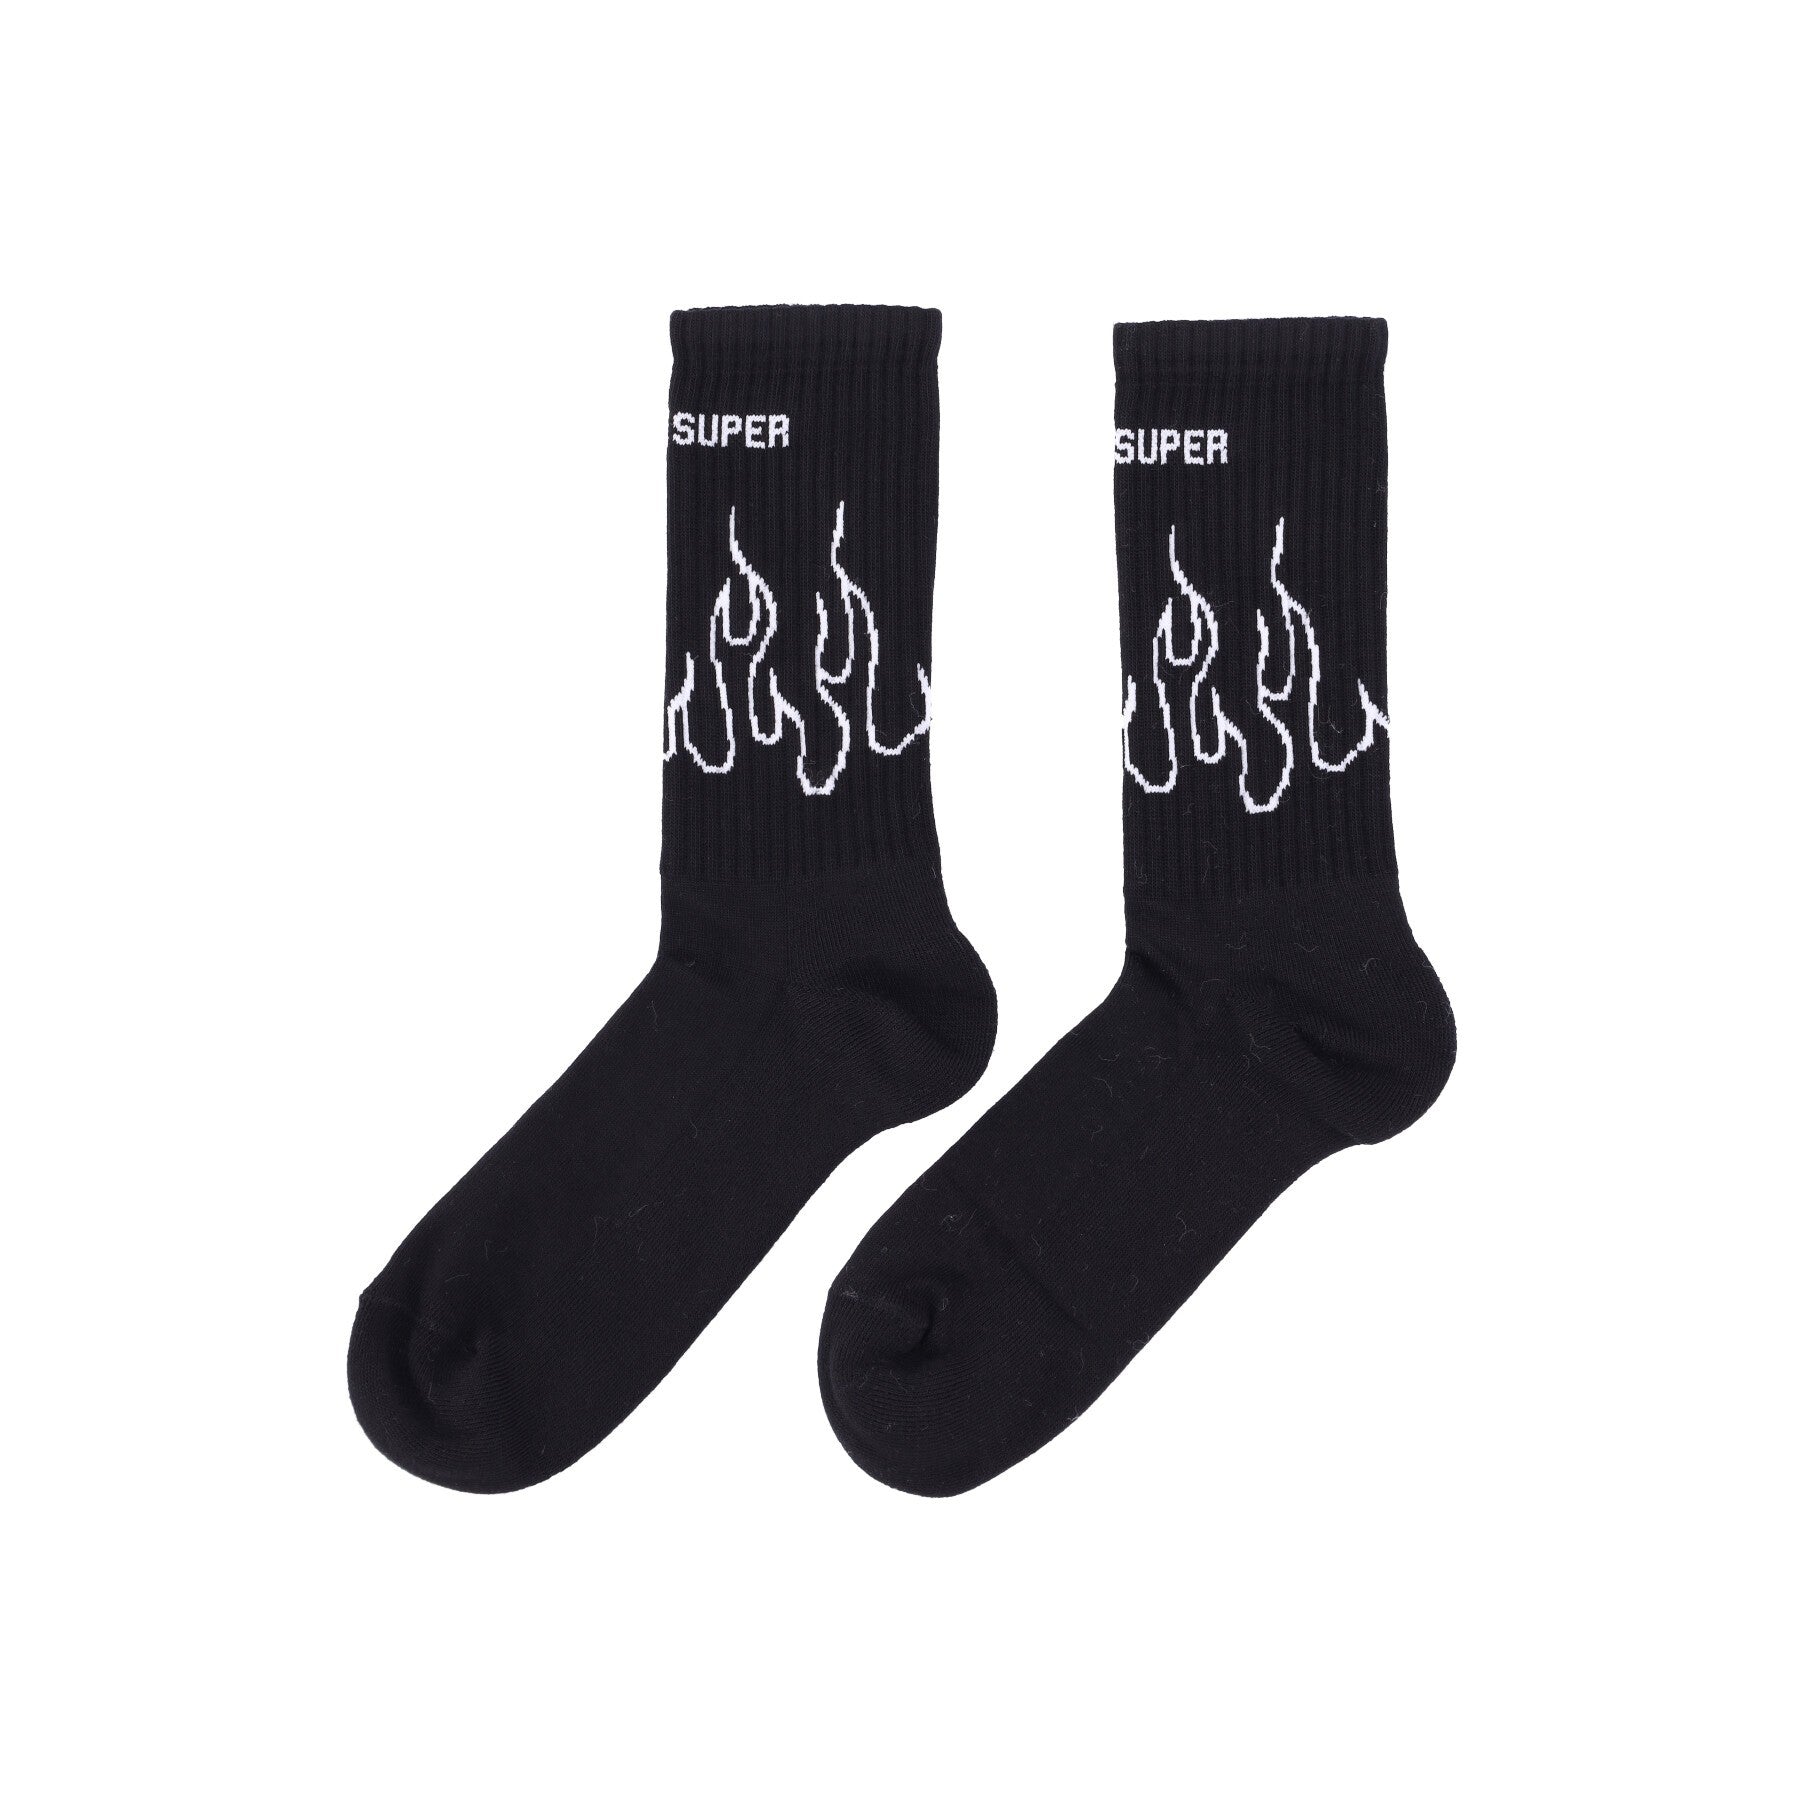 Vision Of Super, Calza Media Uomo Flames Contour Socks, Black/white